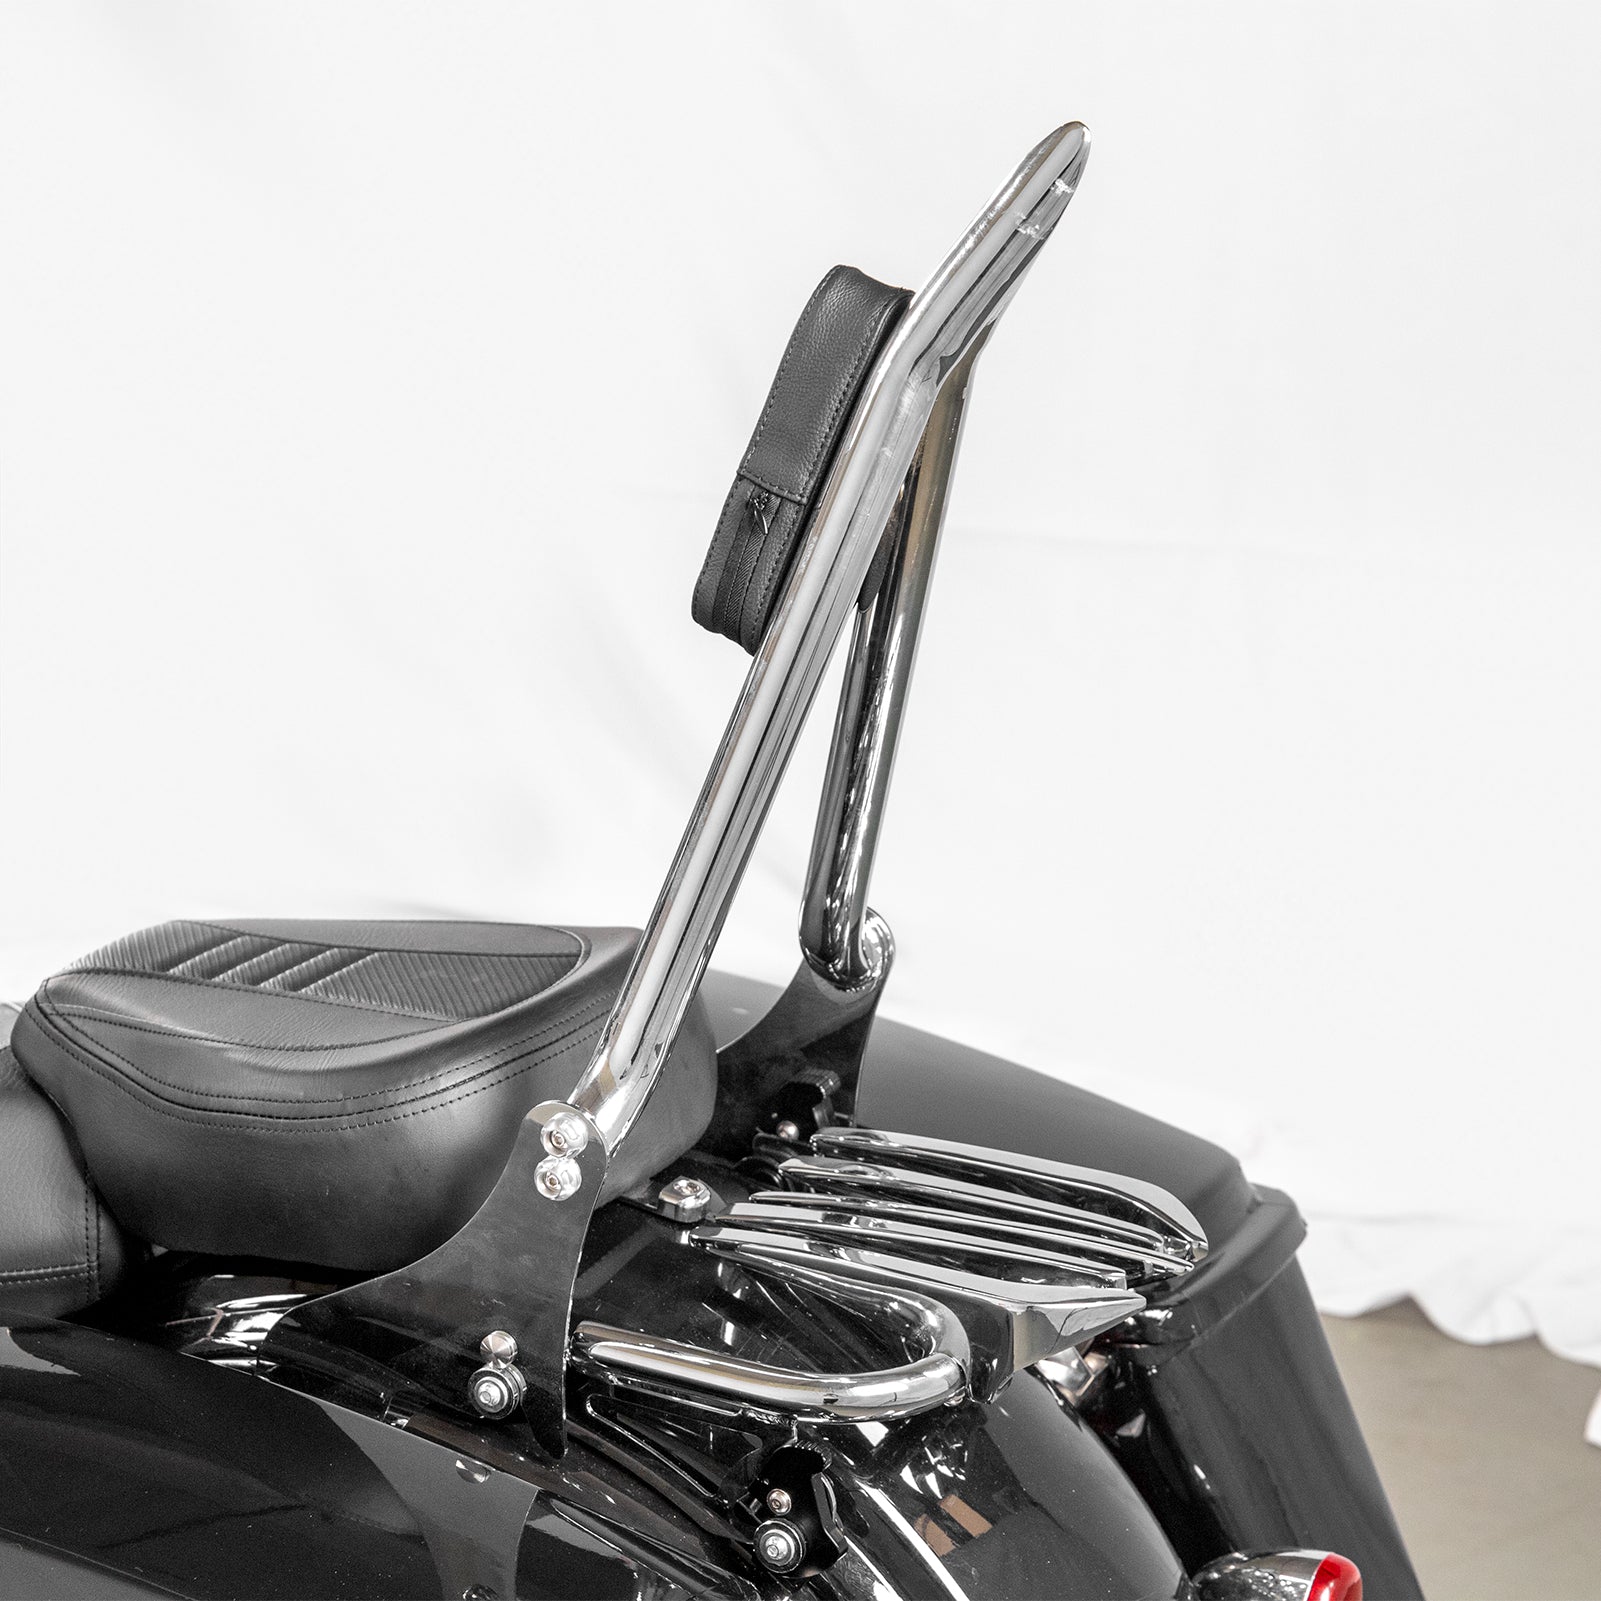 XKH Group Motorcycle Chrome Sissy Bar Passenger Backrest and Point Docking Kit For ハーレー HD Touring 2009 2013 シーシーバー - 4